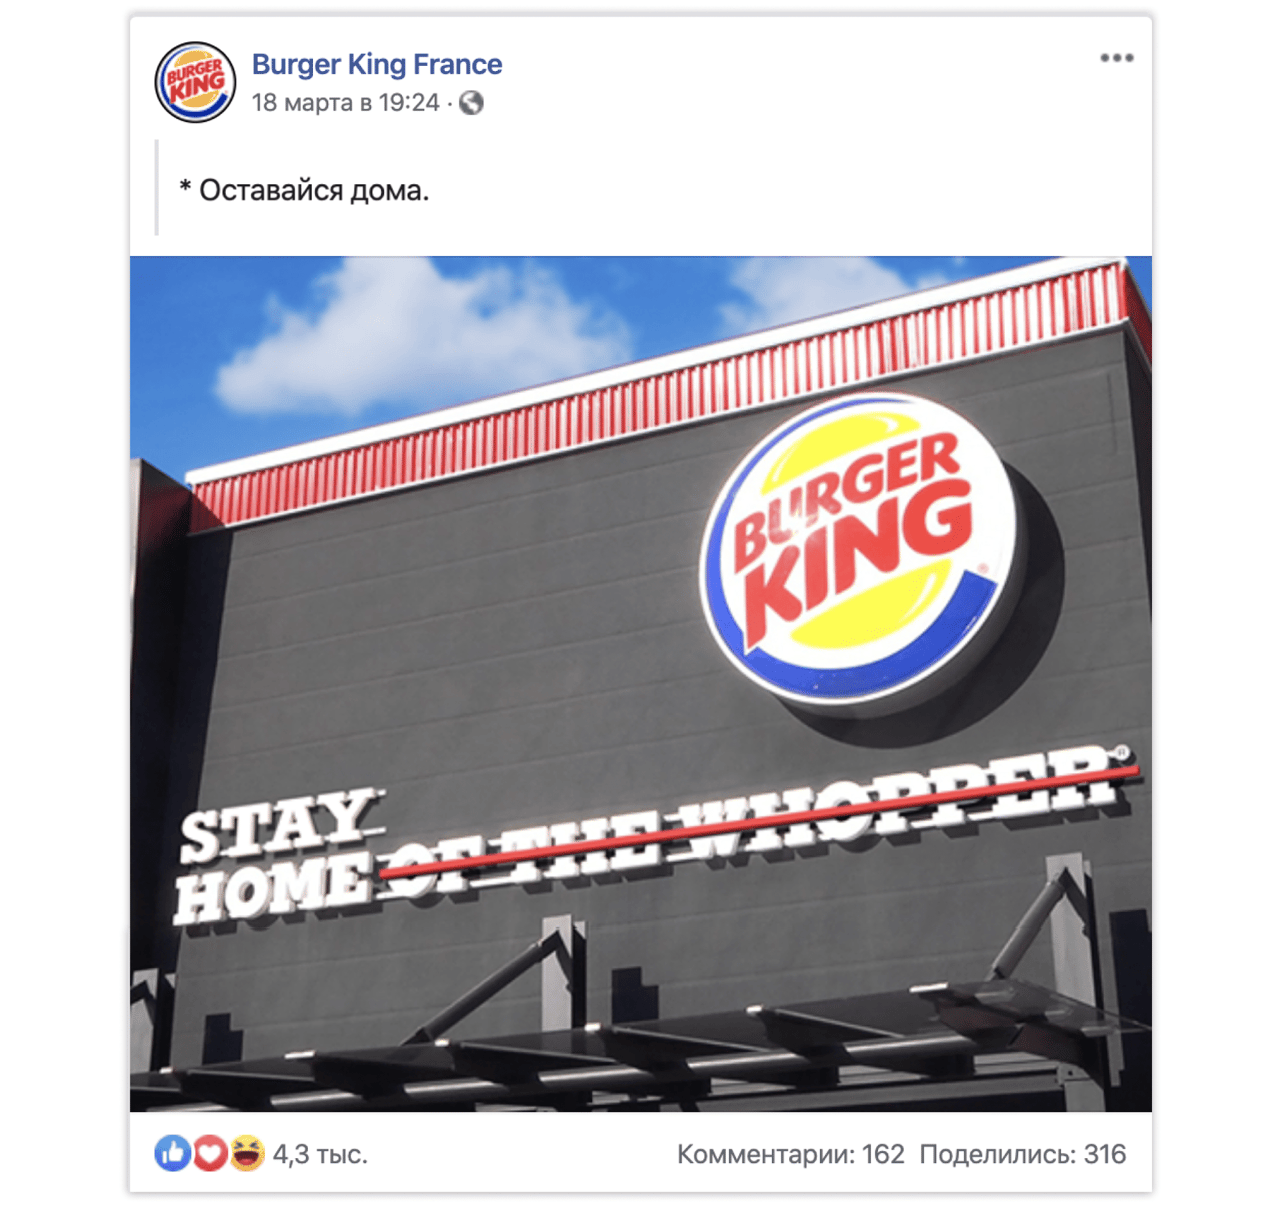 Французский Burger King логотип не тронул, но рекомендовал остаться дома